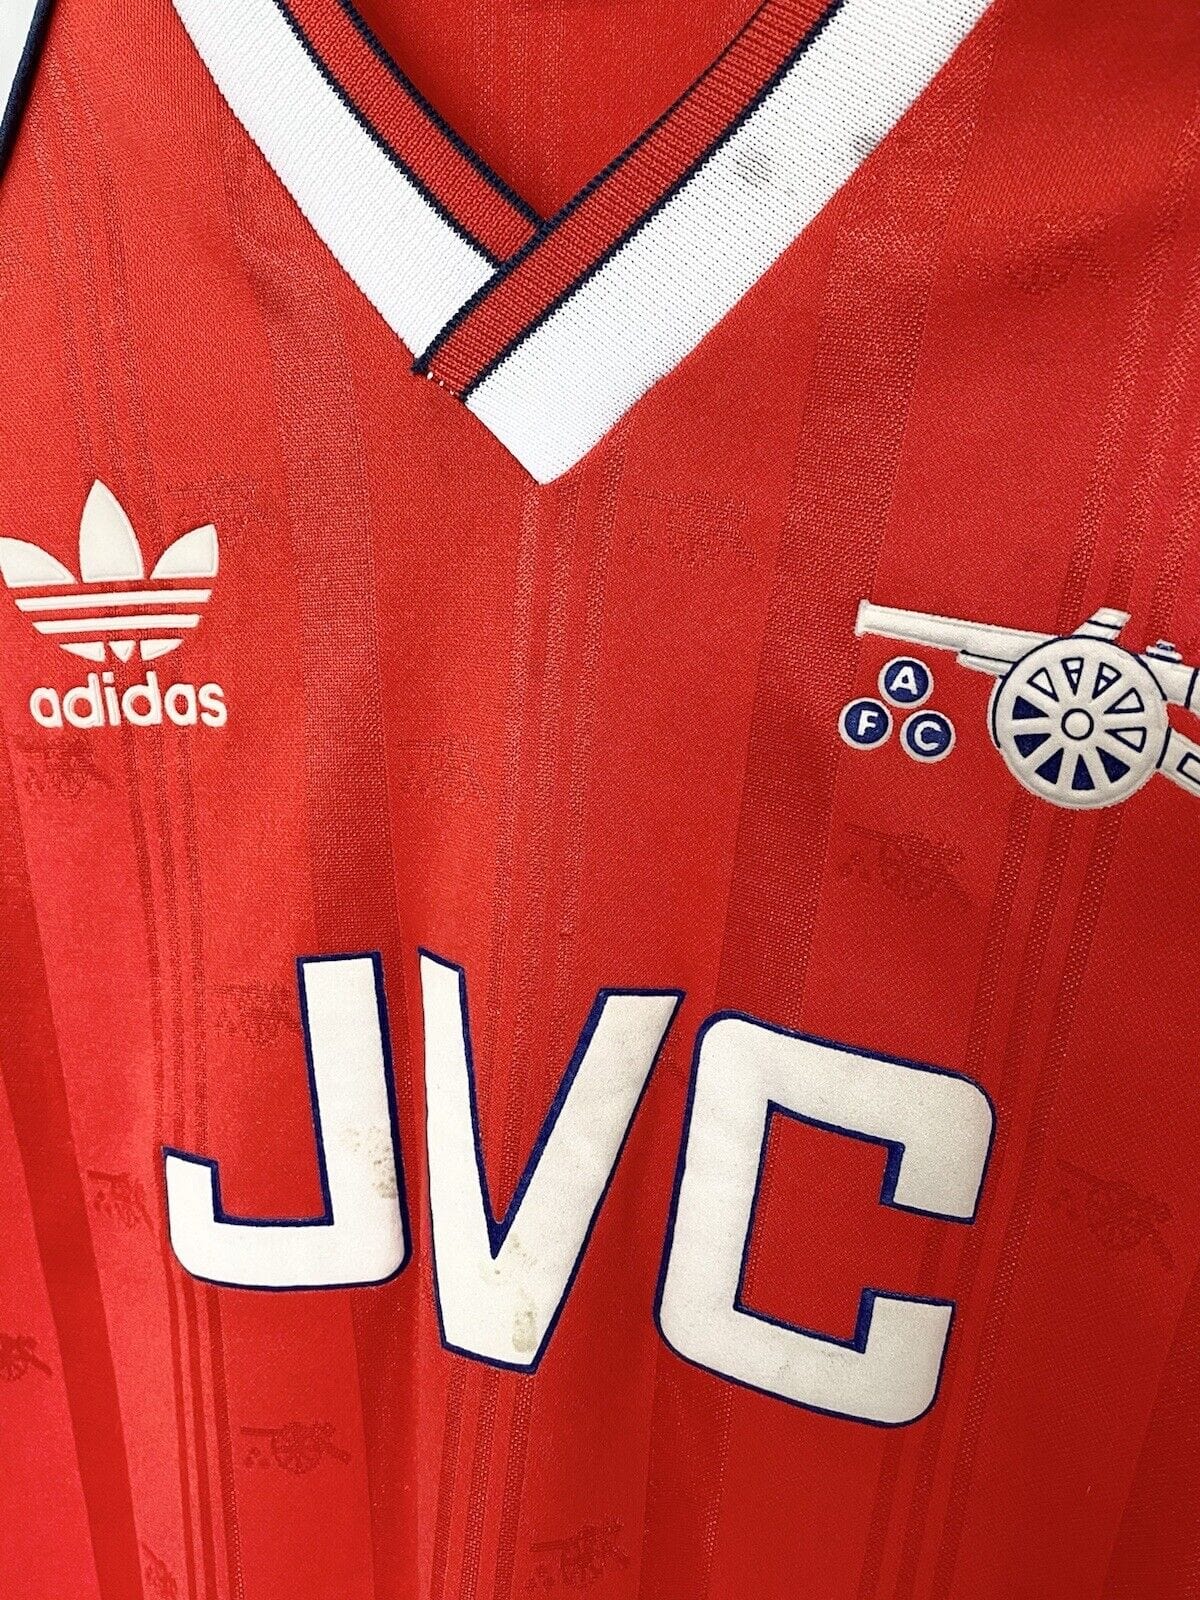 Arsenal Vintage Jersey 